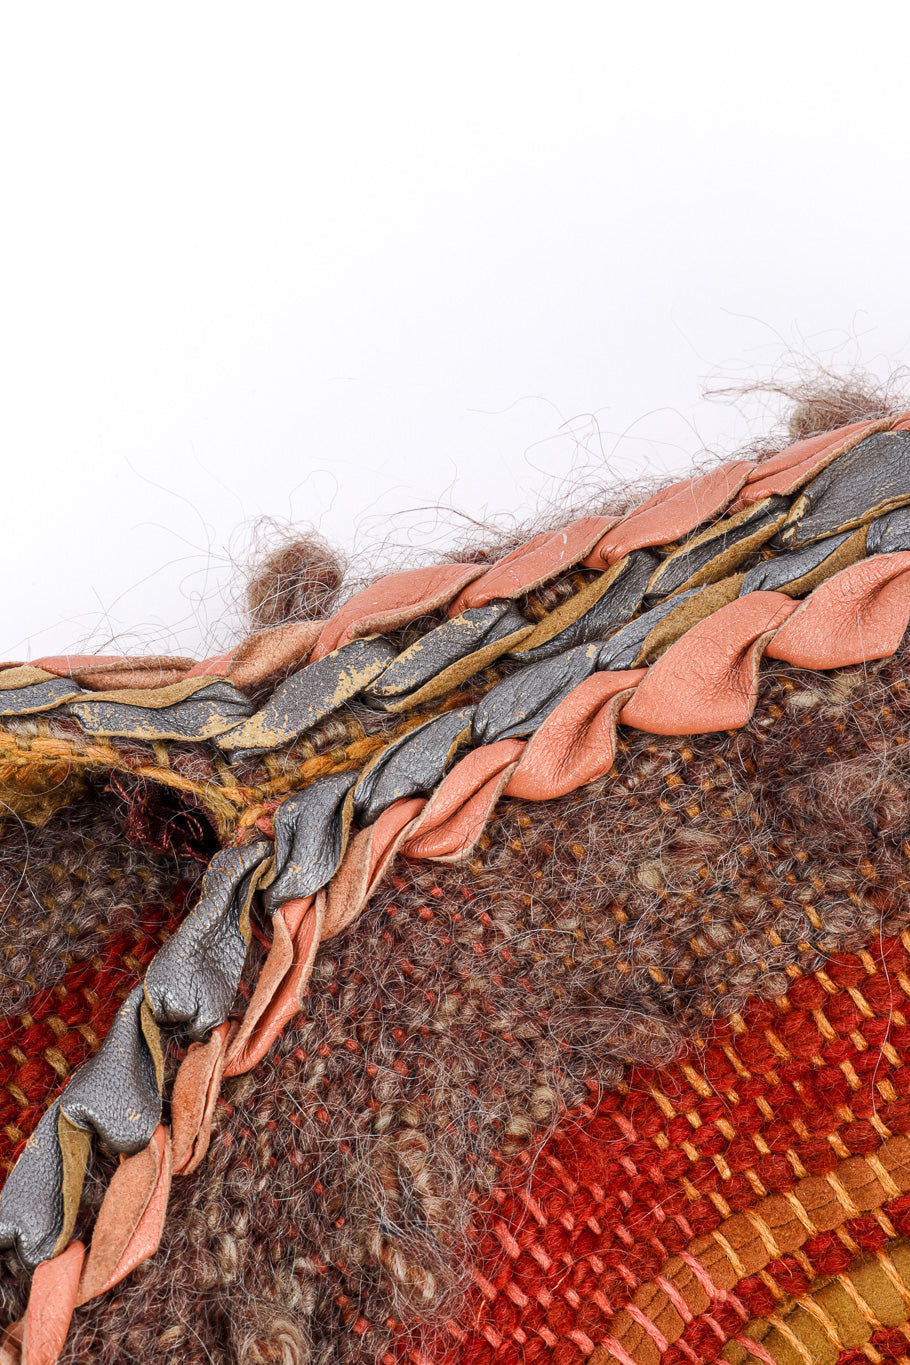 Woven Carpet Coat by Norma Walters leather wear @recessla